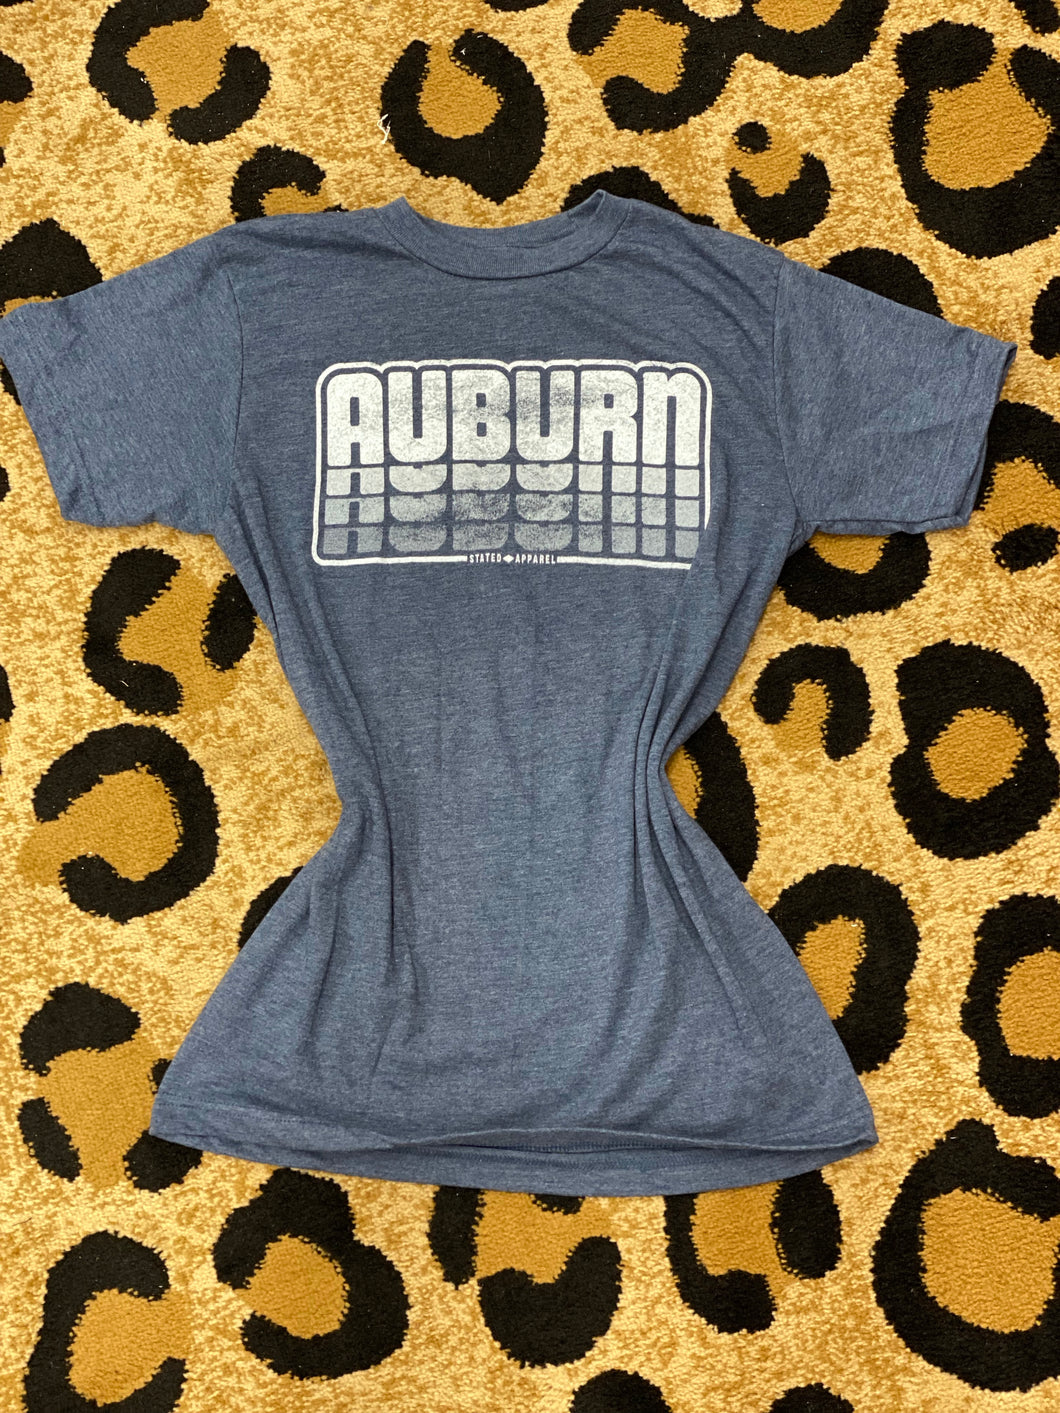 Auburn retro stack shirt